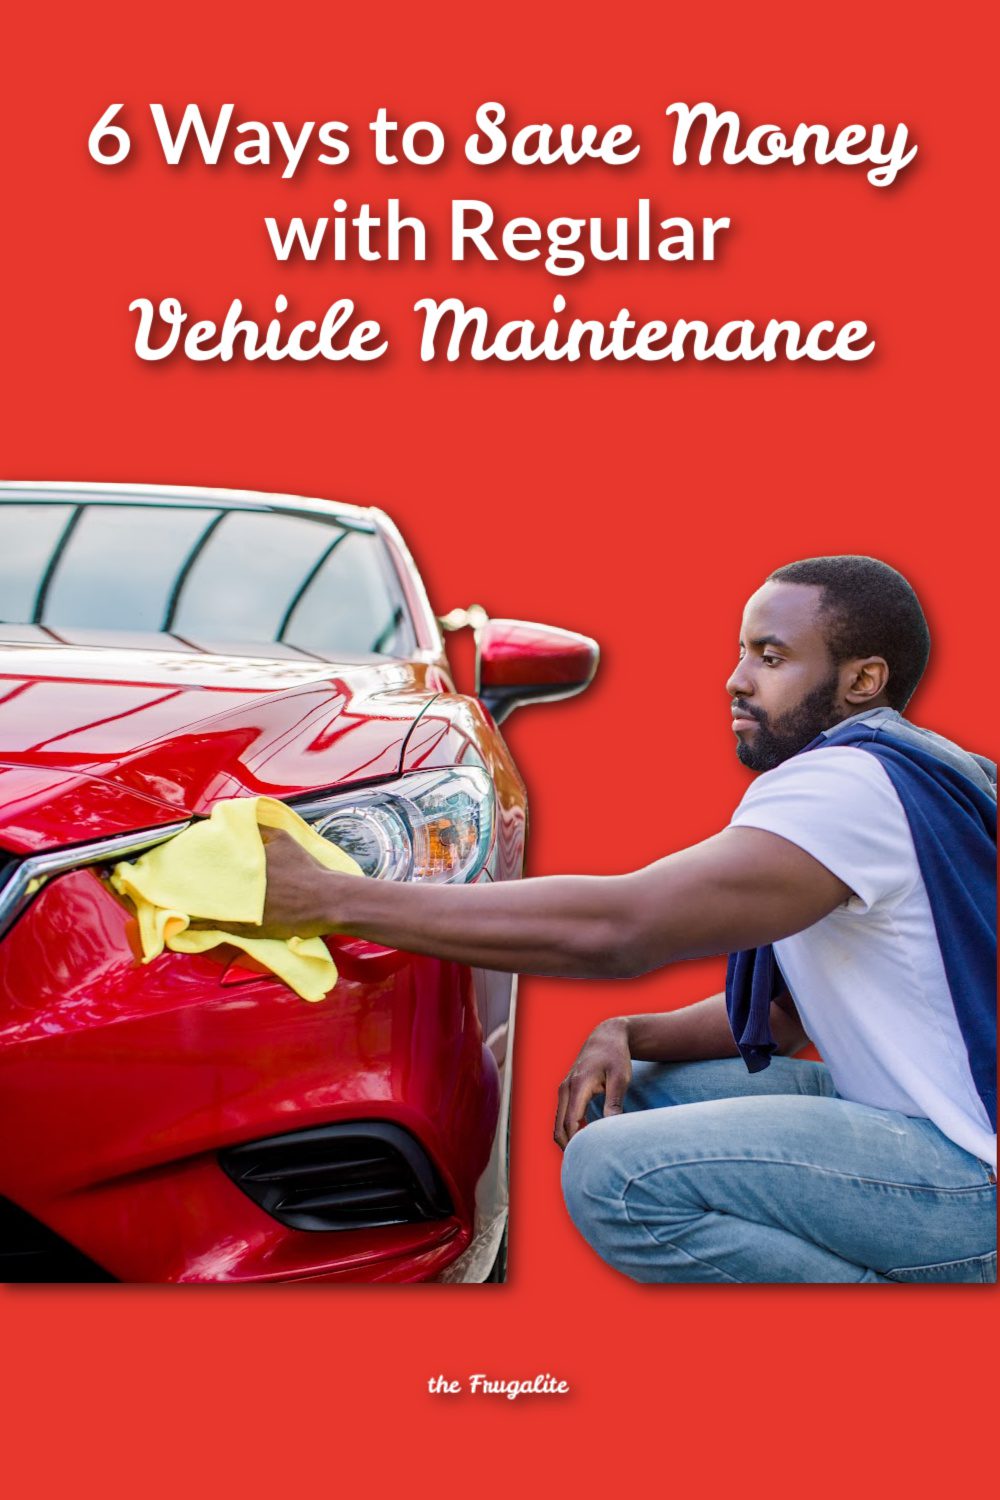 6 Ways to Save Money with Regular Vehicle Maintenance